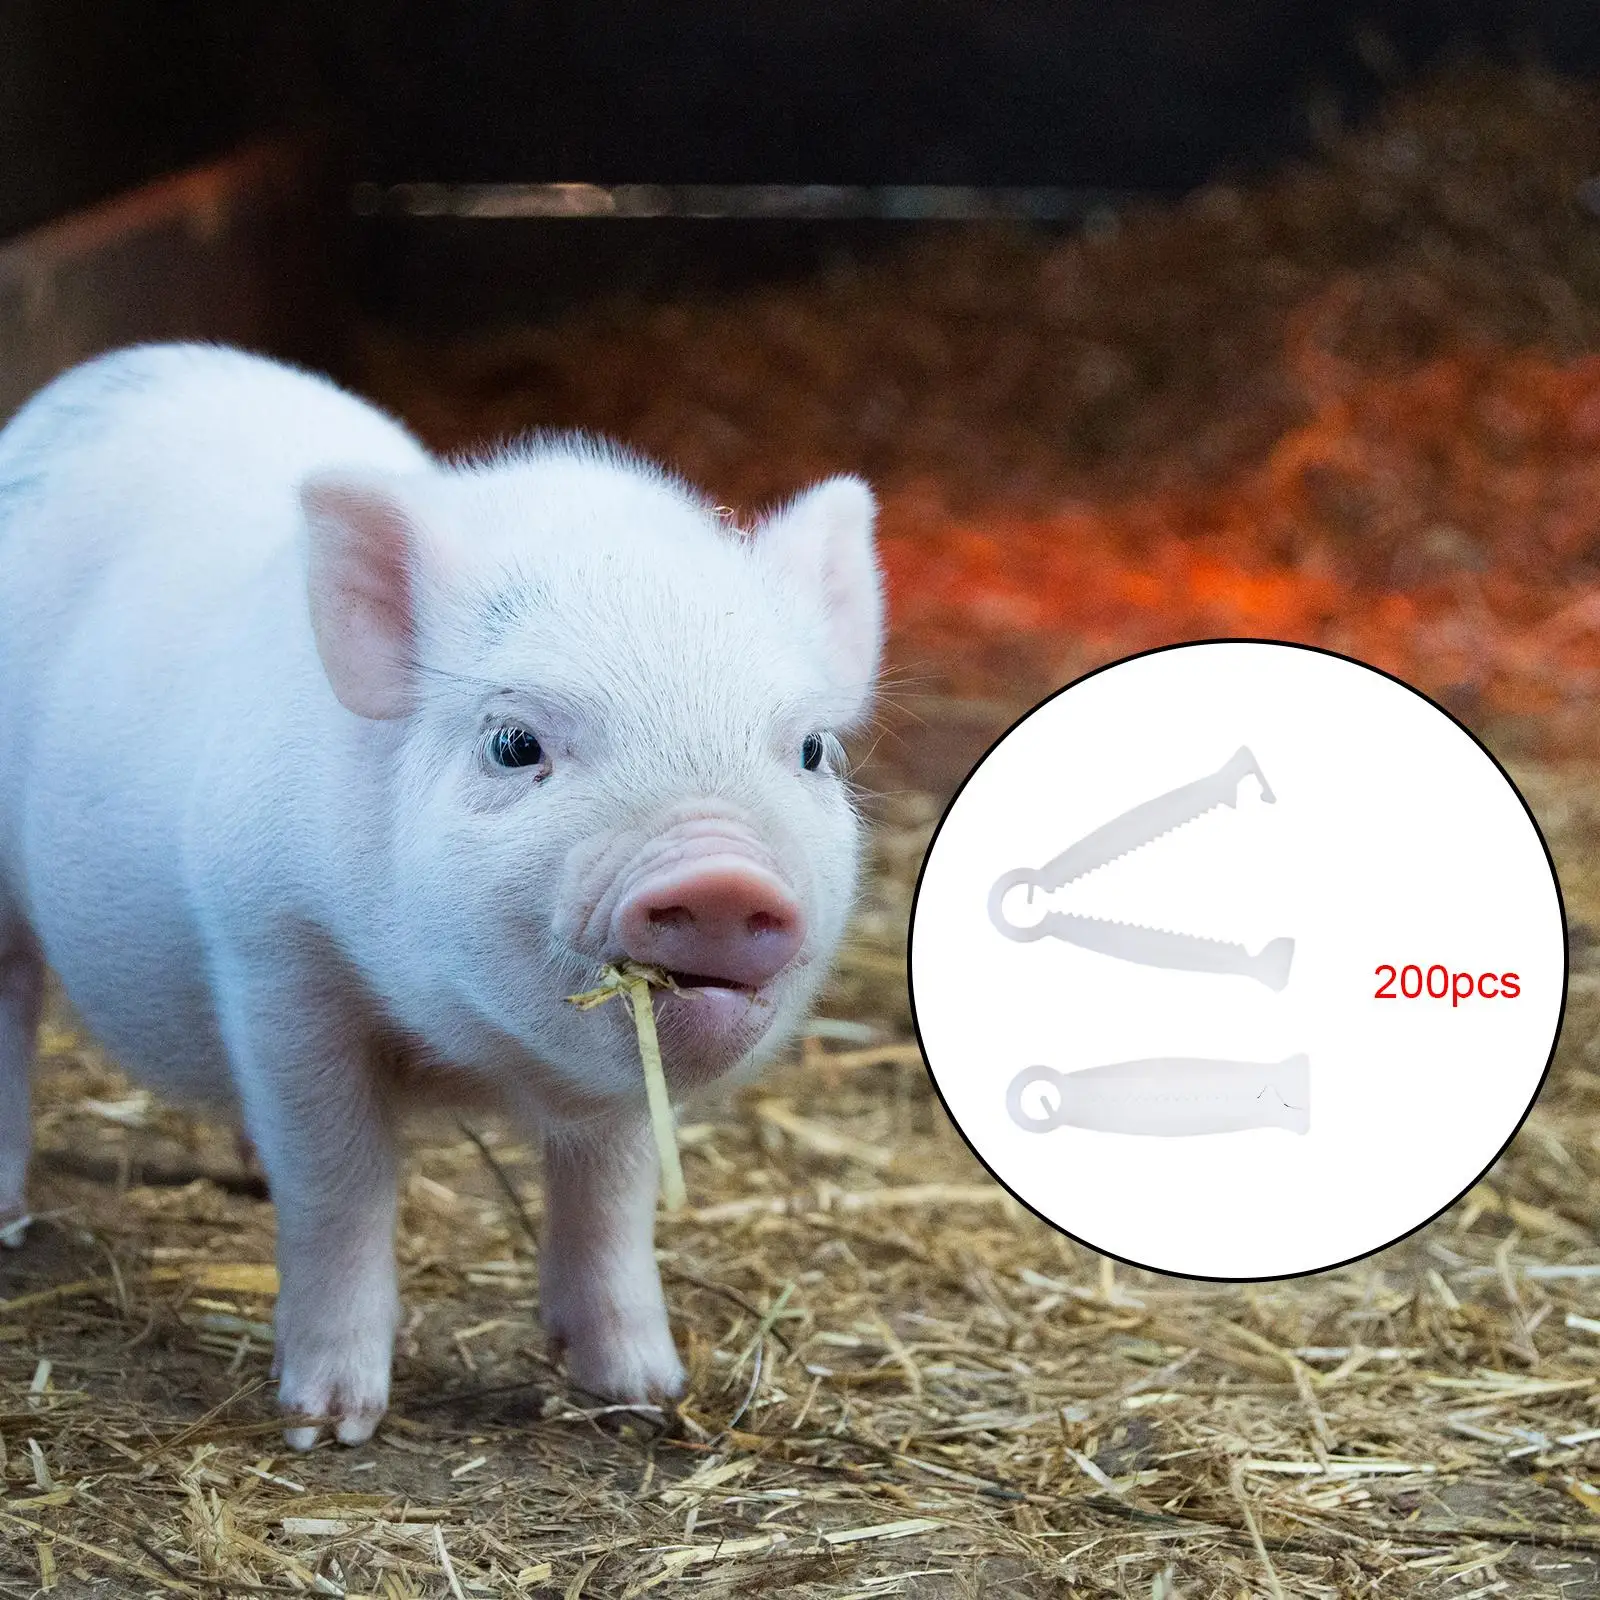 200 Pieces Livestock Birth Supplies farm Supply Disposable Whelping Kits Pig Umbilical Cord Clip for sheep Lamb Pet Animals